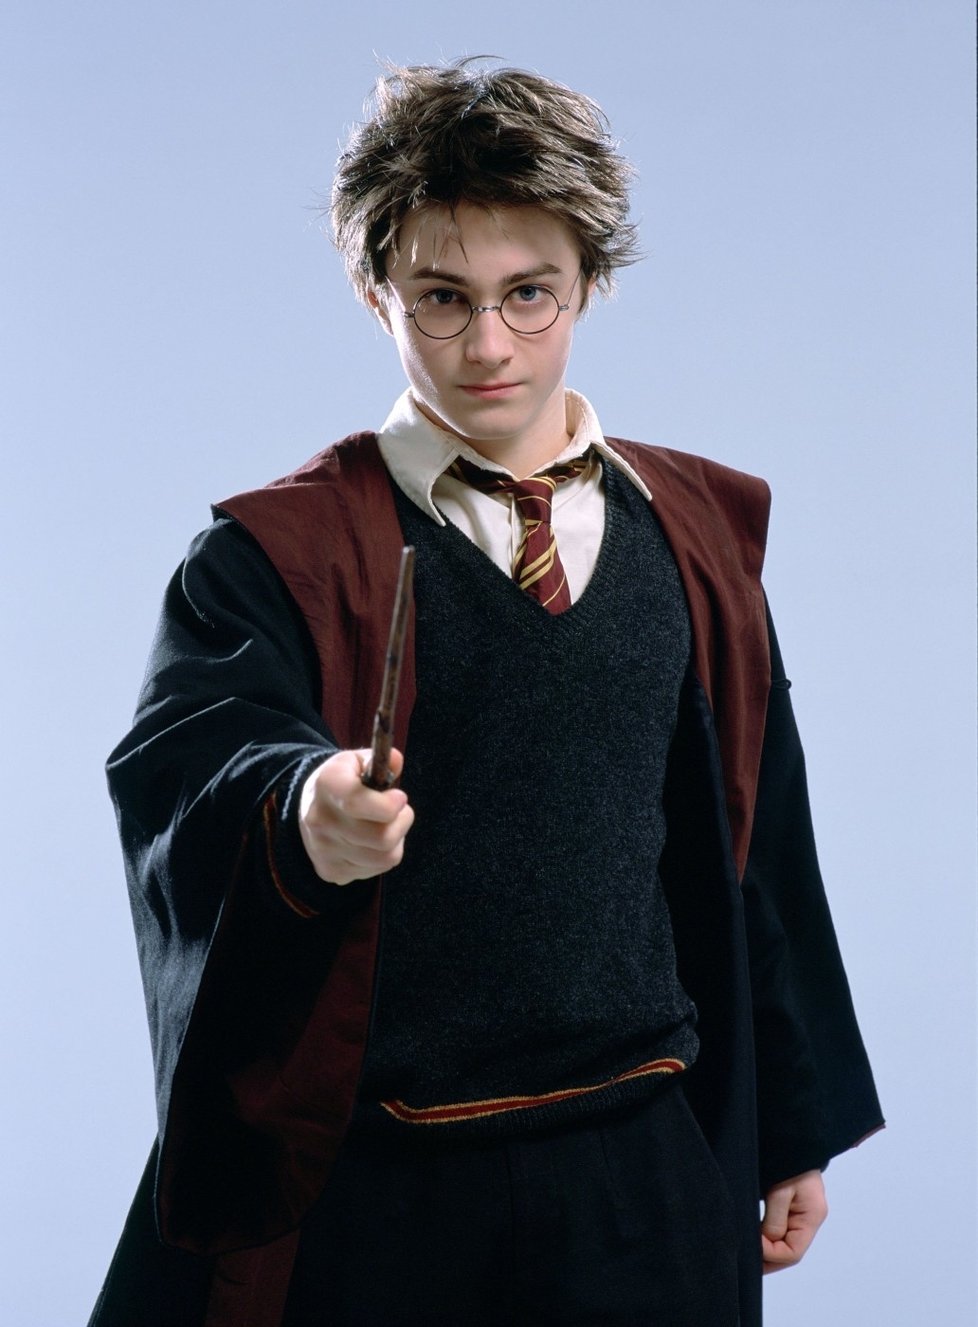 V roli Harryho Daniel Radcliffe jako Harry Potter